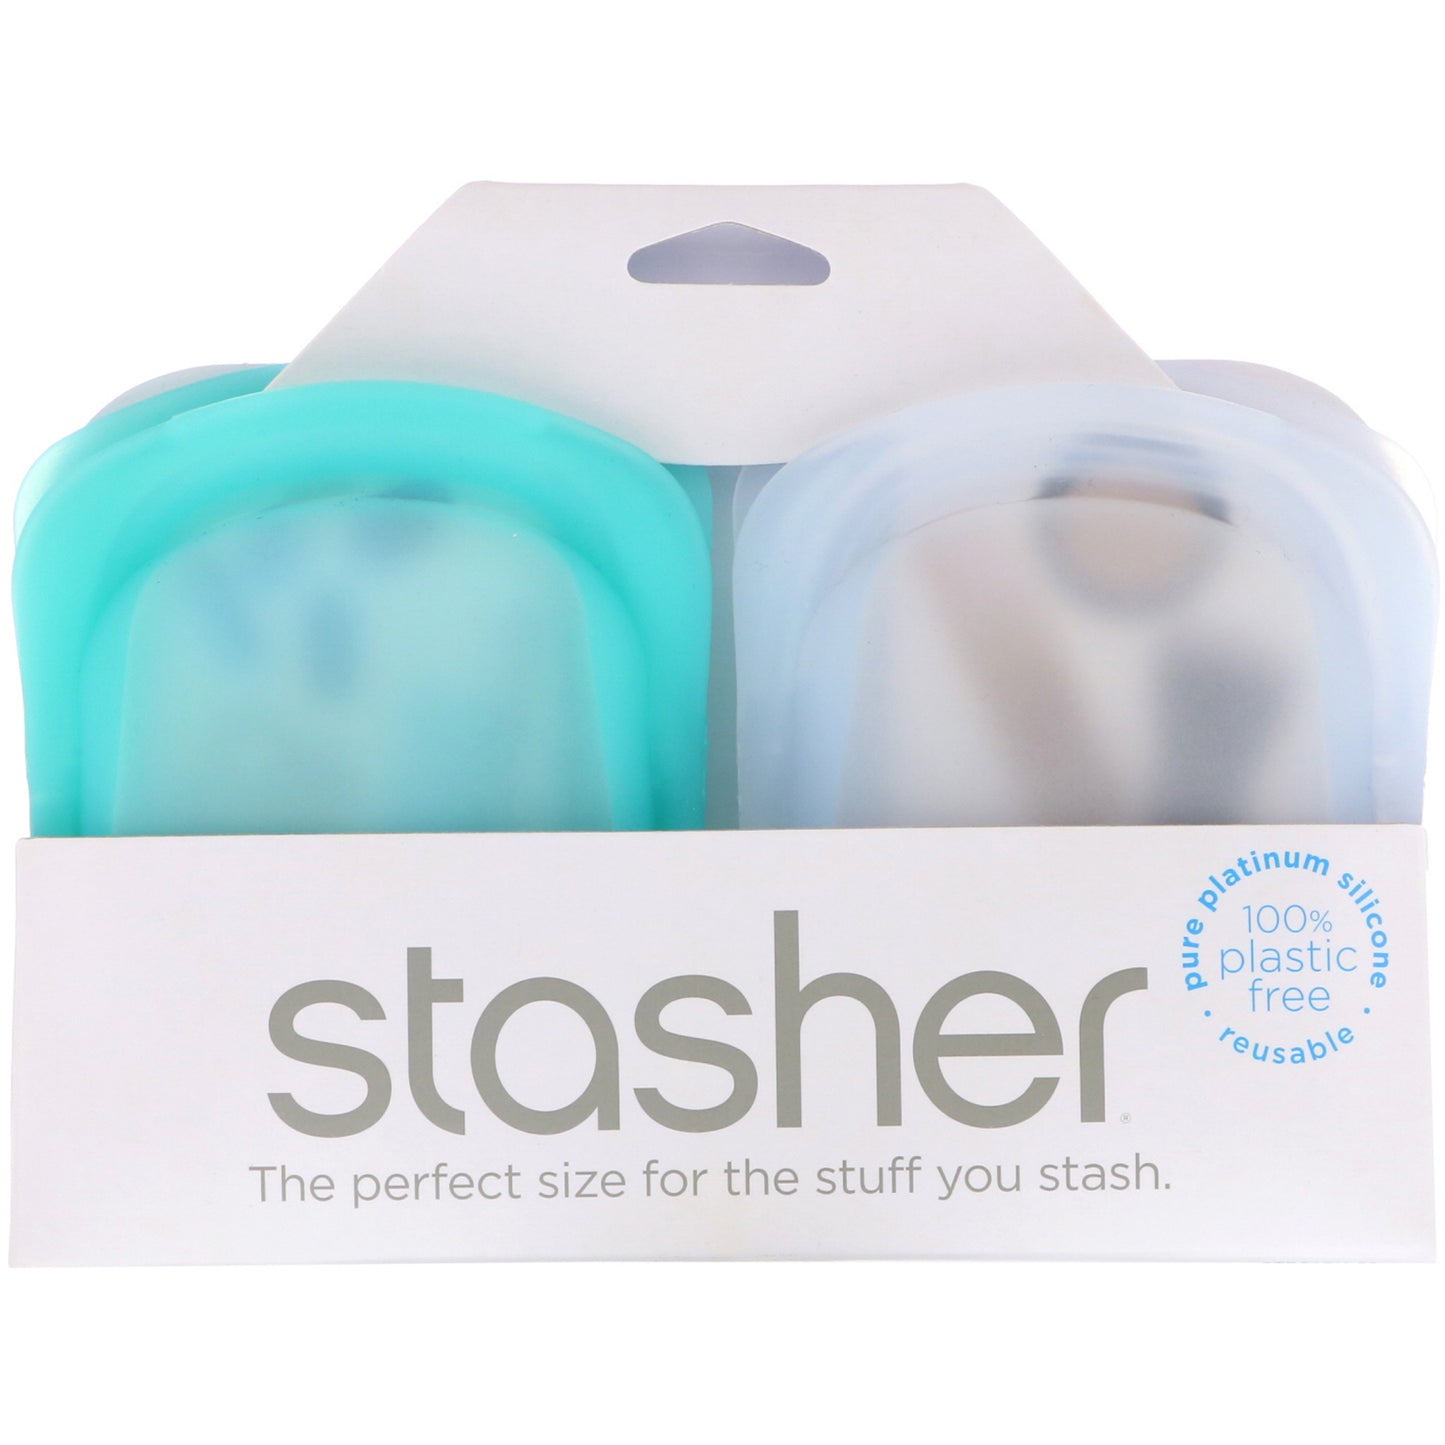 Stasher Bag: Pocket, Clear & Aqua, 2 Pack, 4 oz